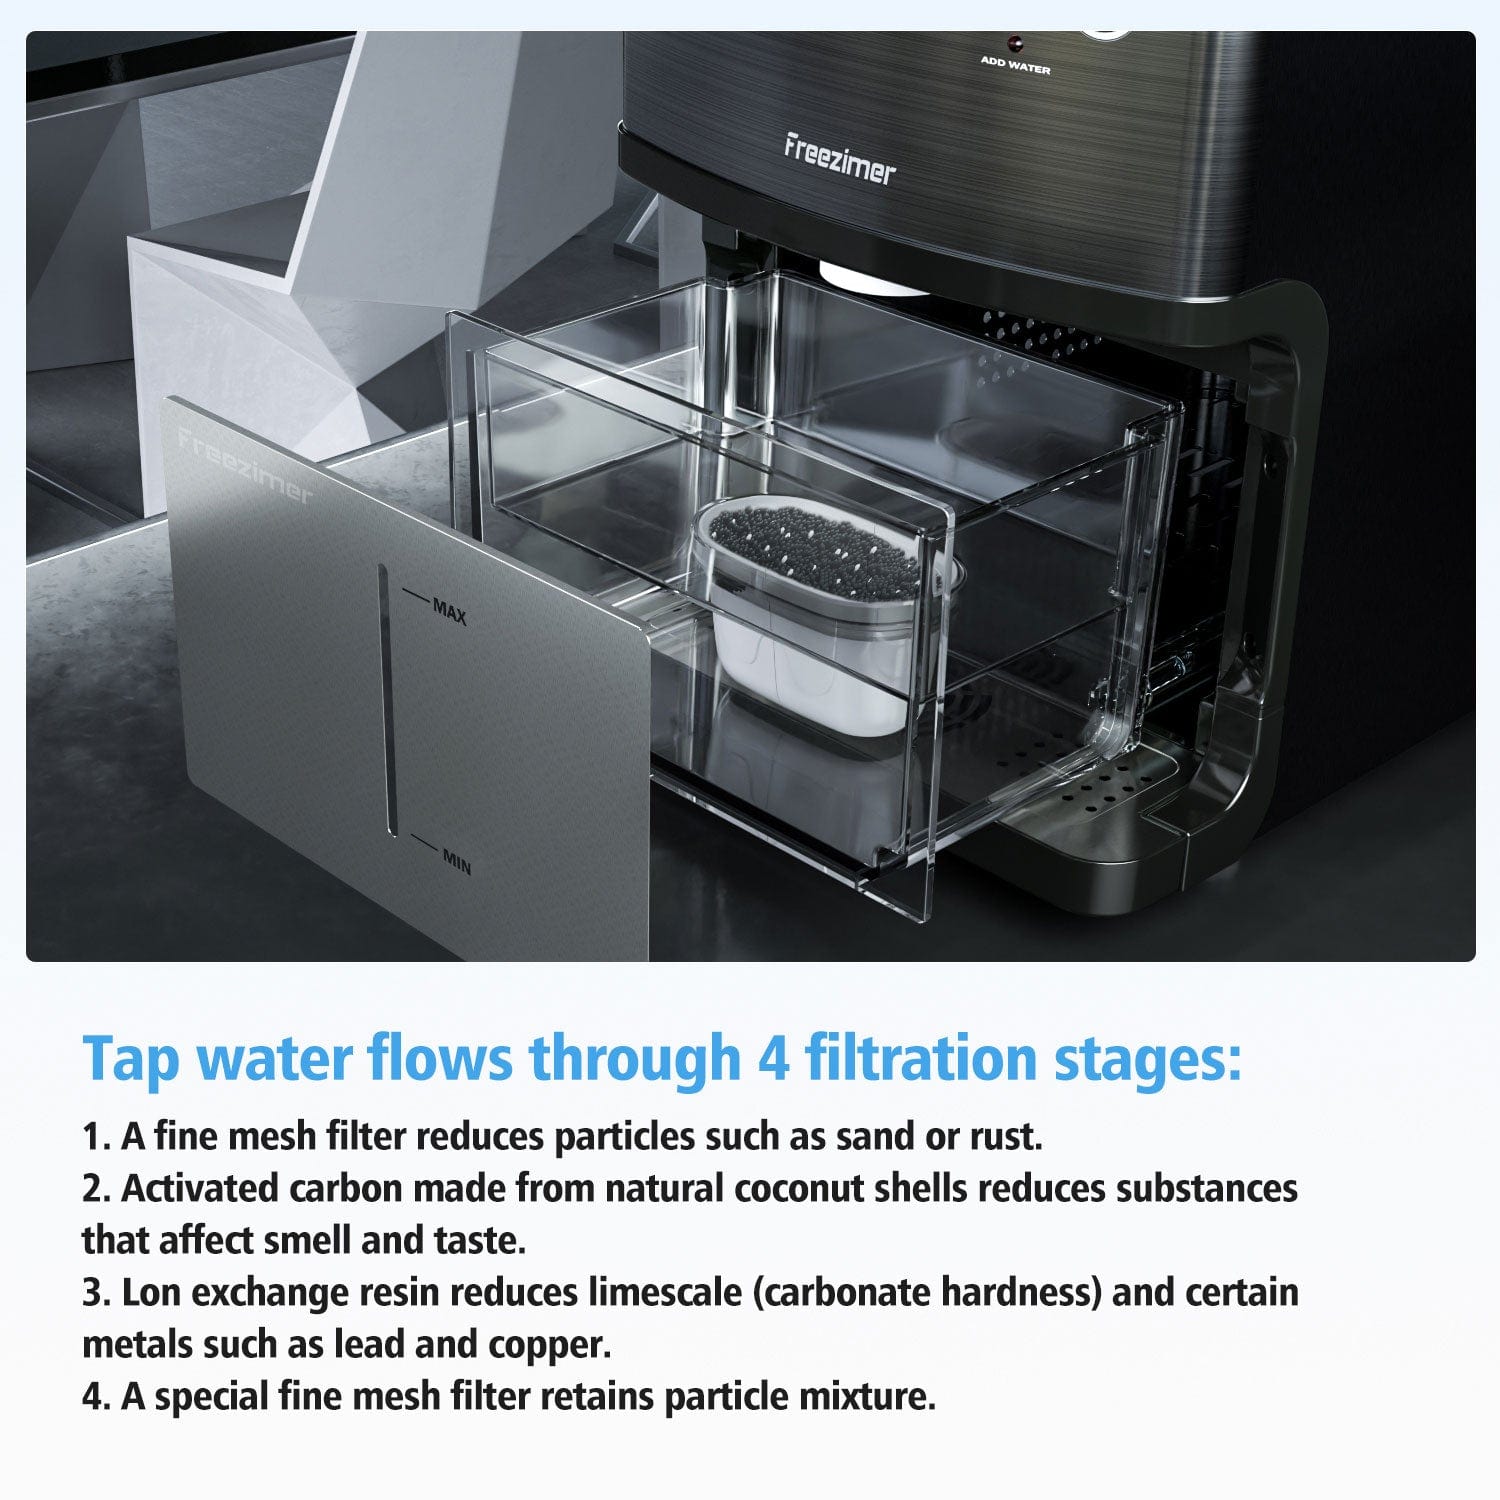 Freezimer HW-01 Nugget Ice Maker Water Filter